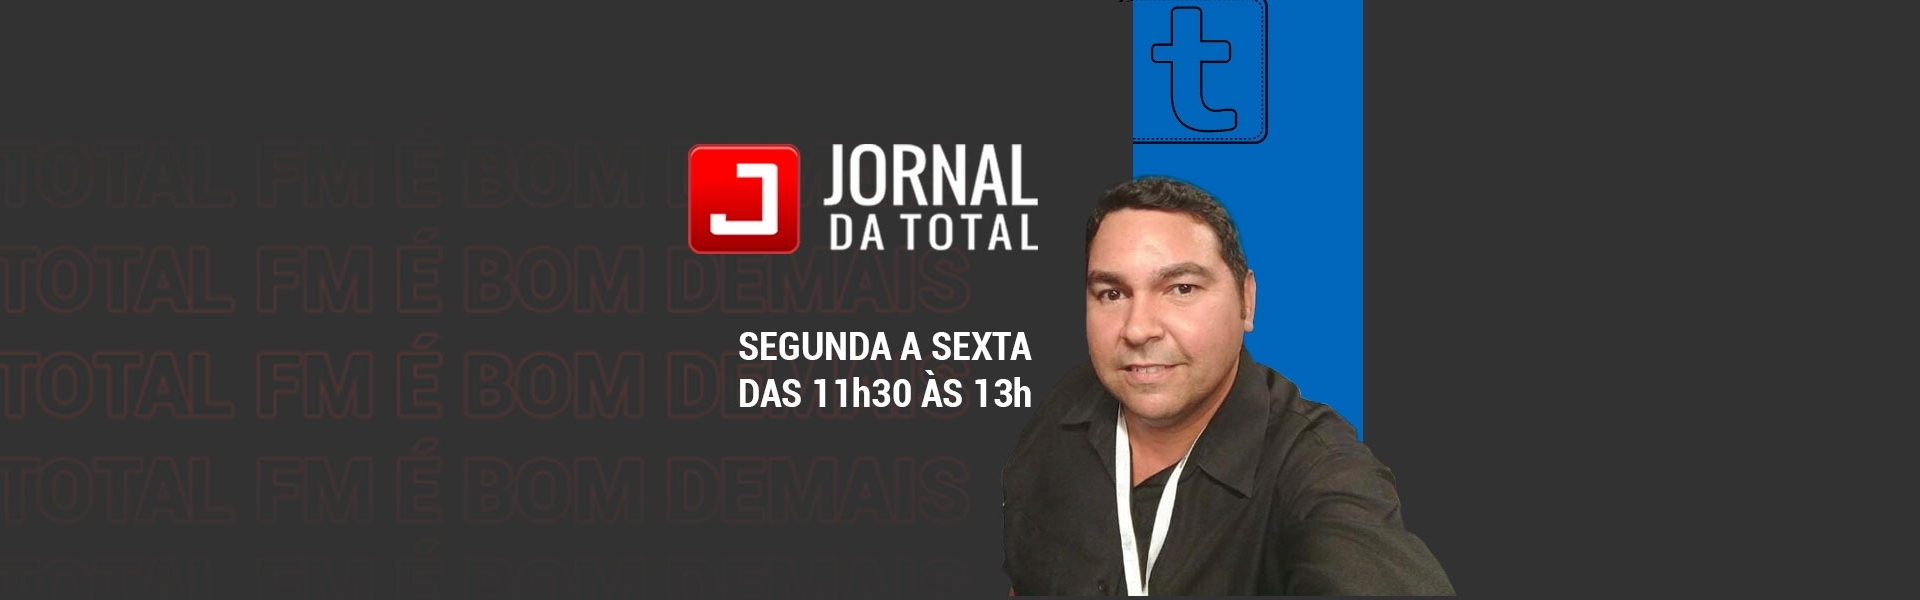 Jornal da Total